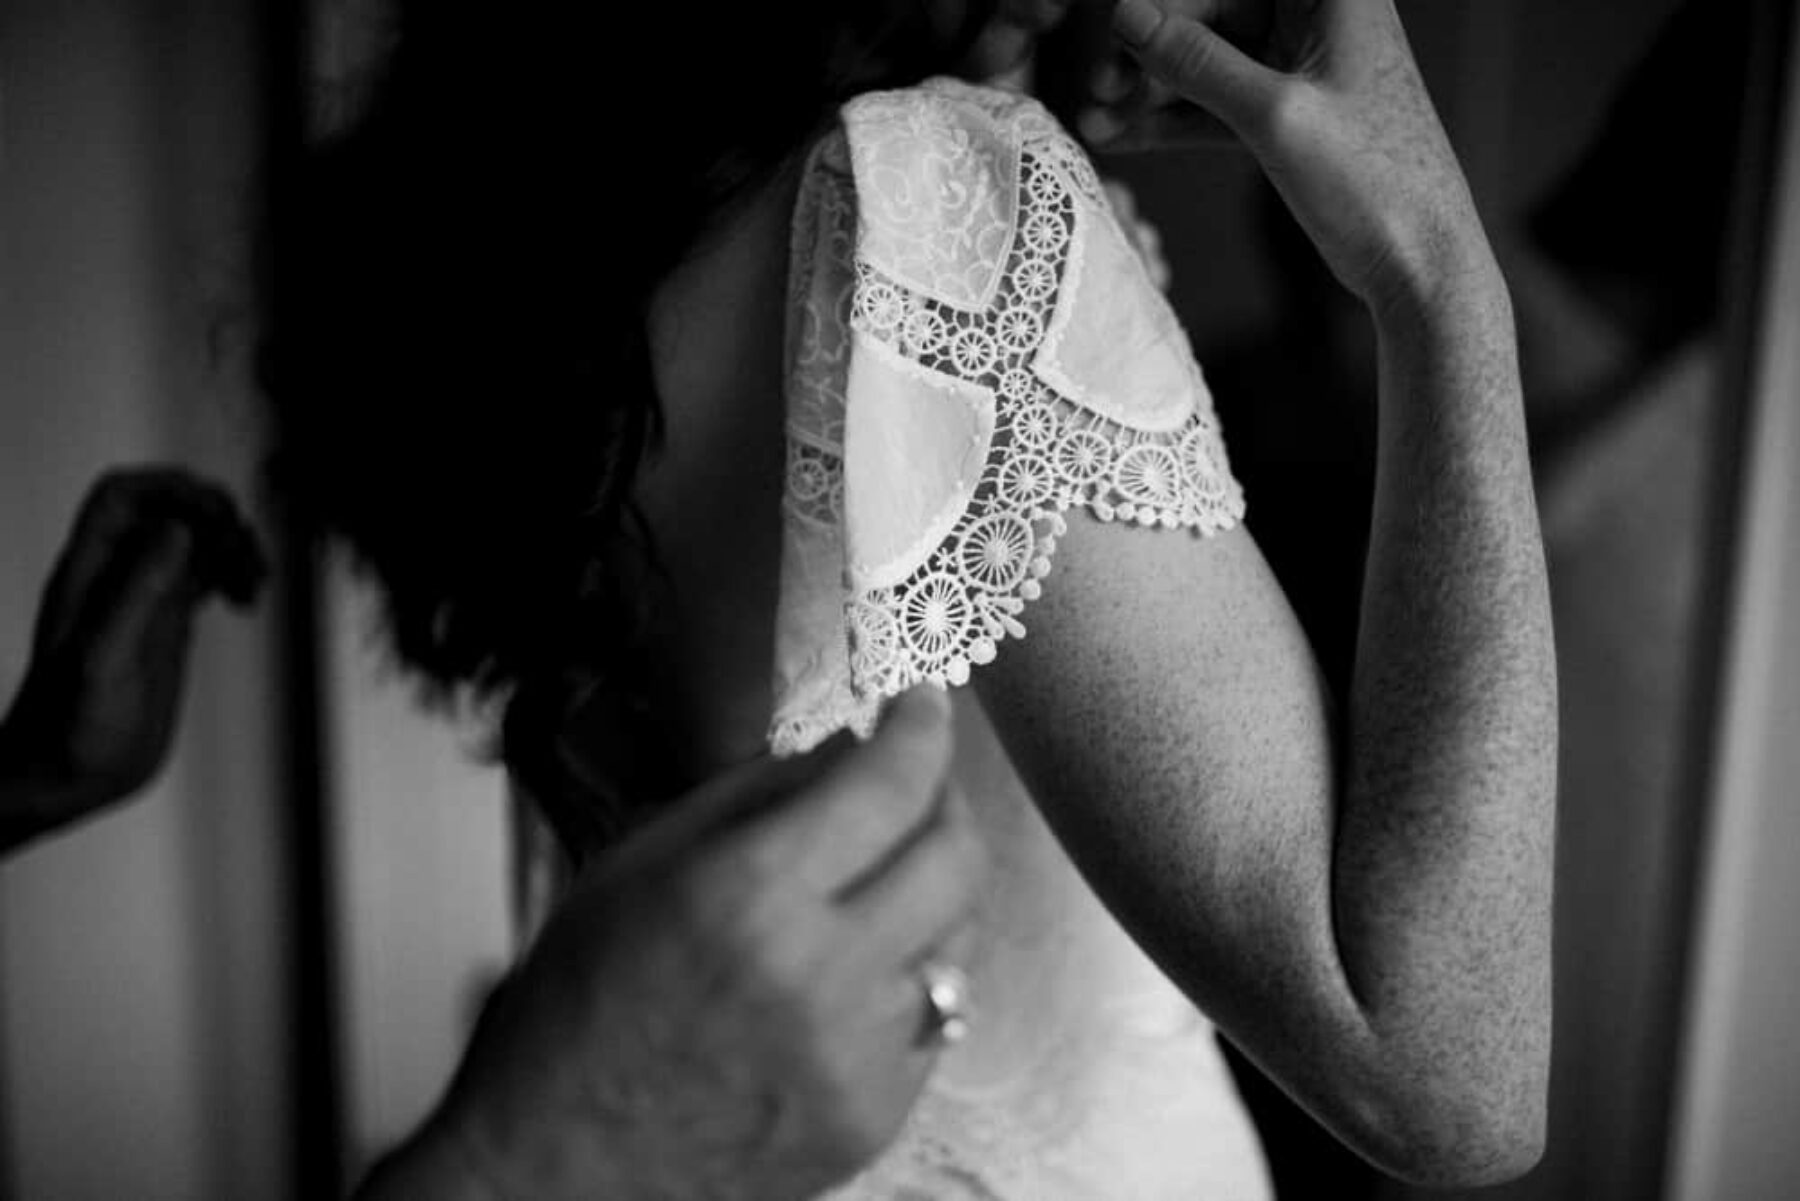 Rue de Seine wedding dress with lace cap sleeves